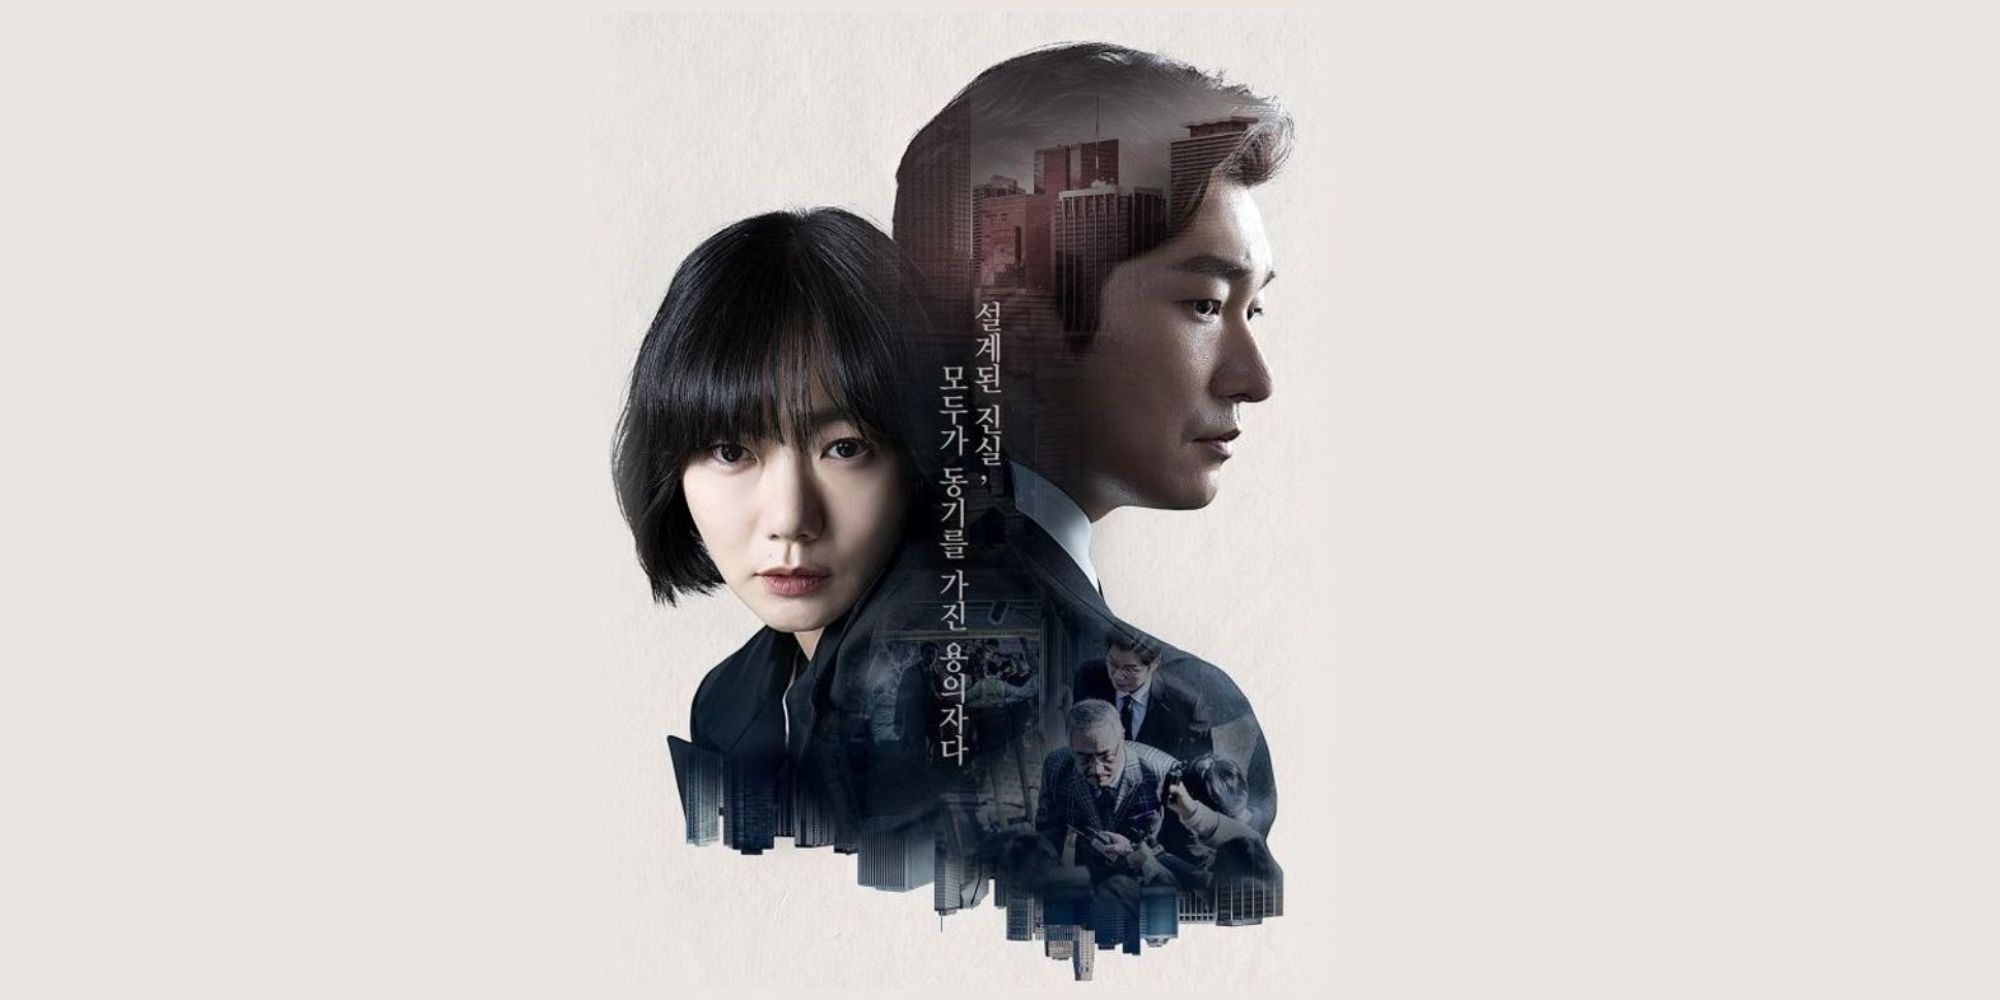 El arte del póster oficial del drama Stranger